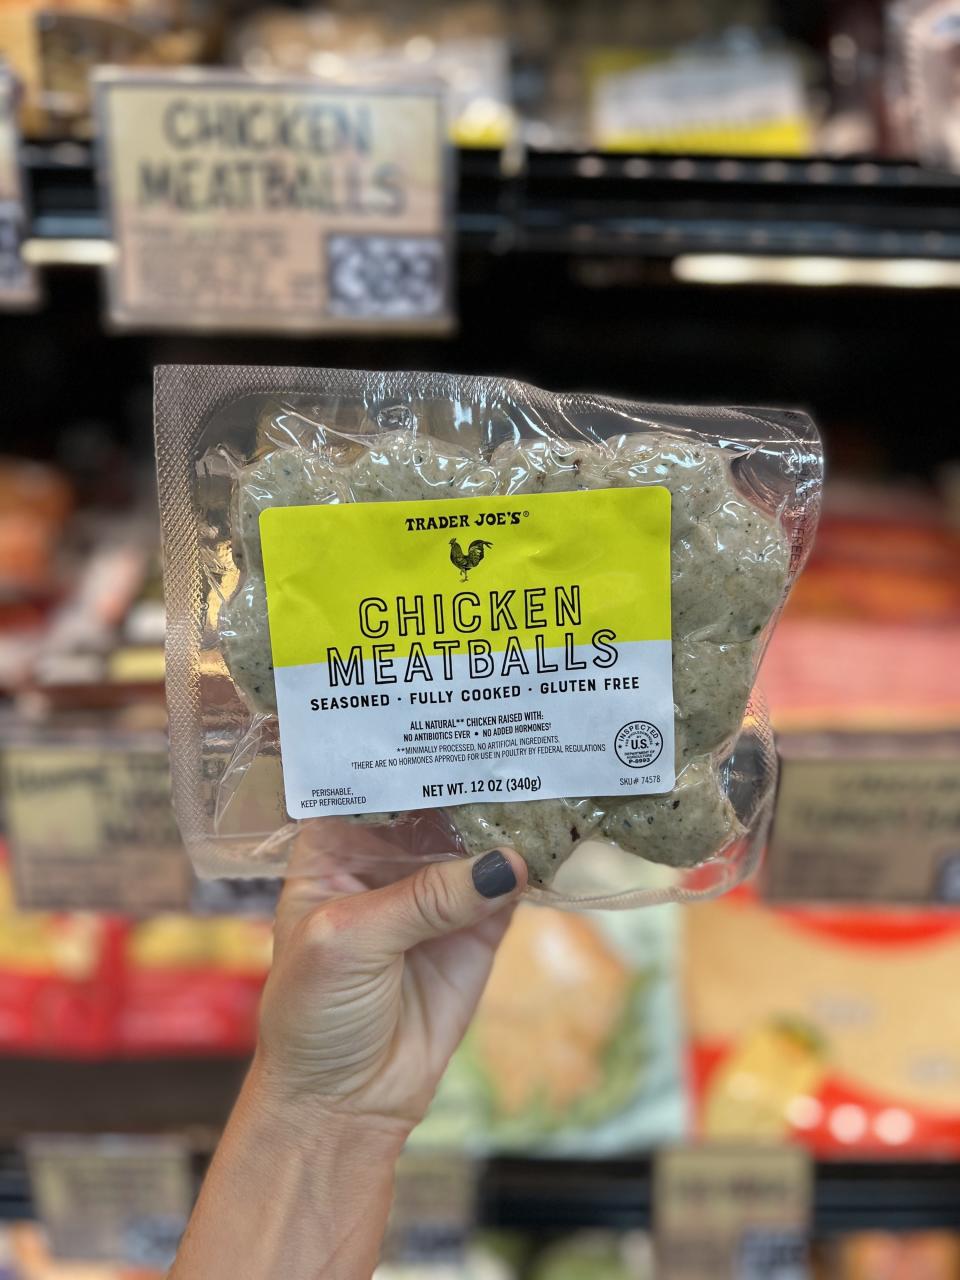 A package of Trader Joe's Chicken Meatballs